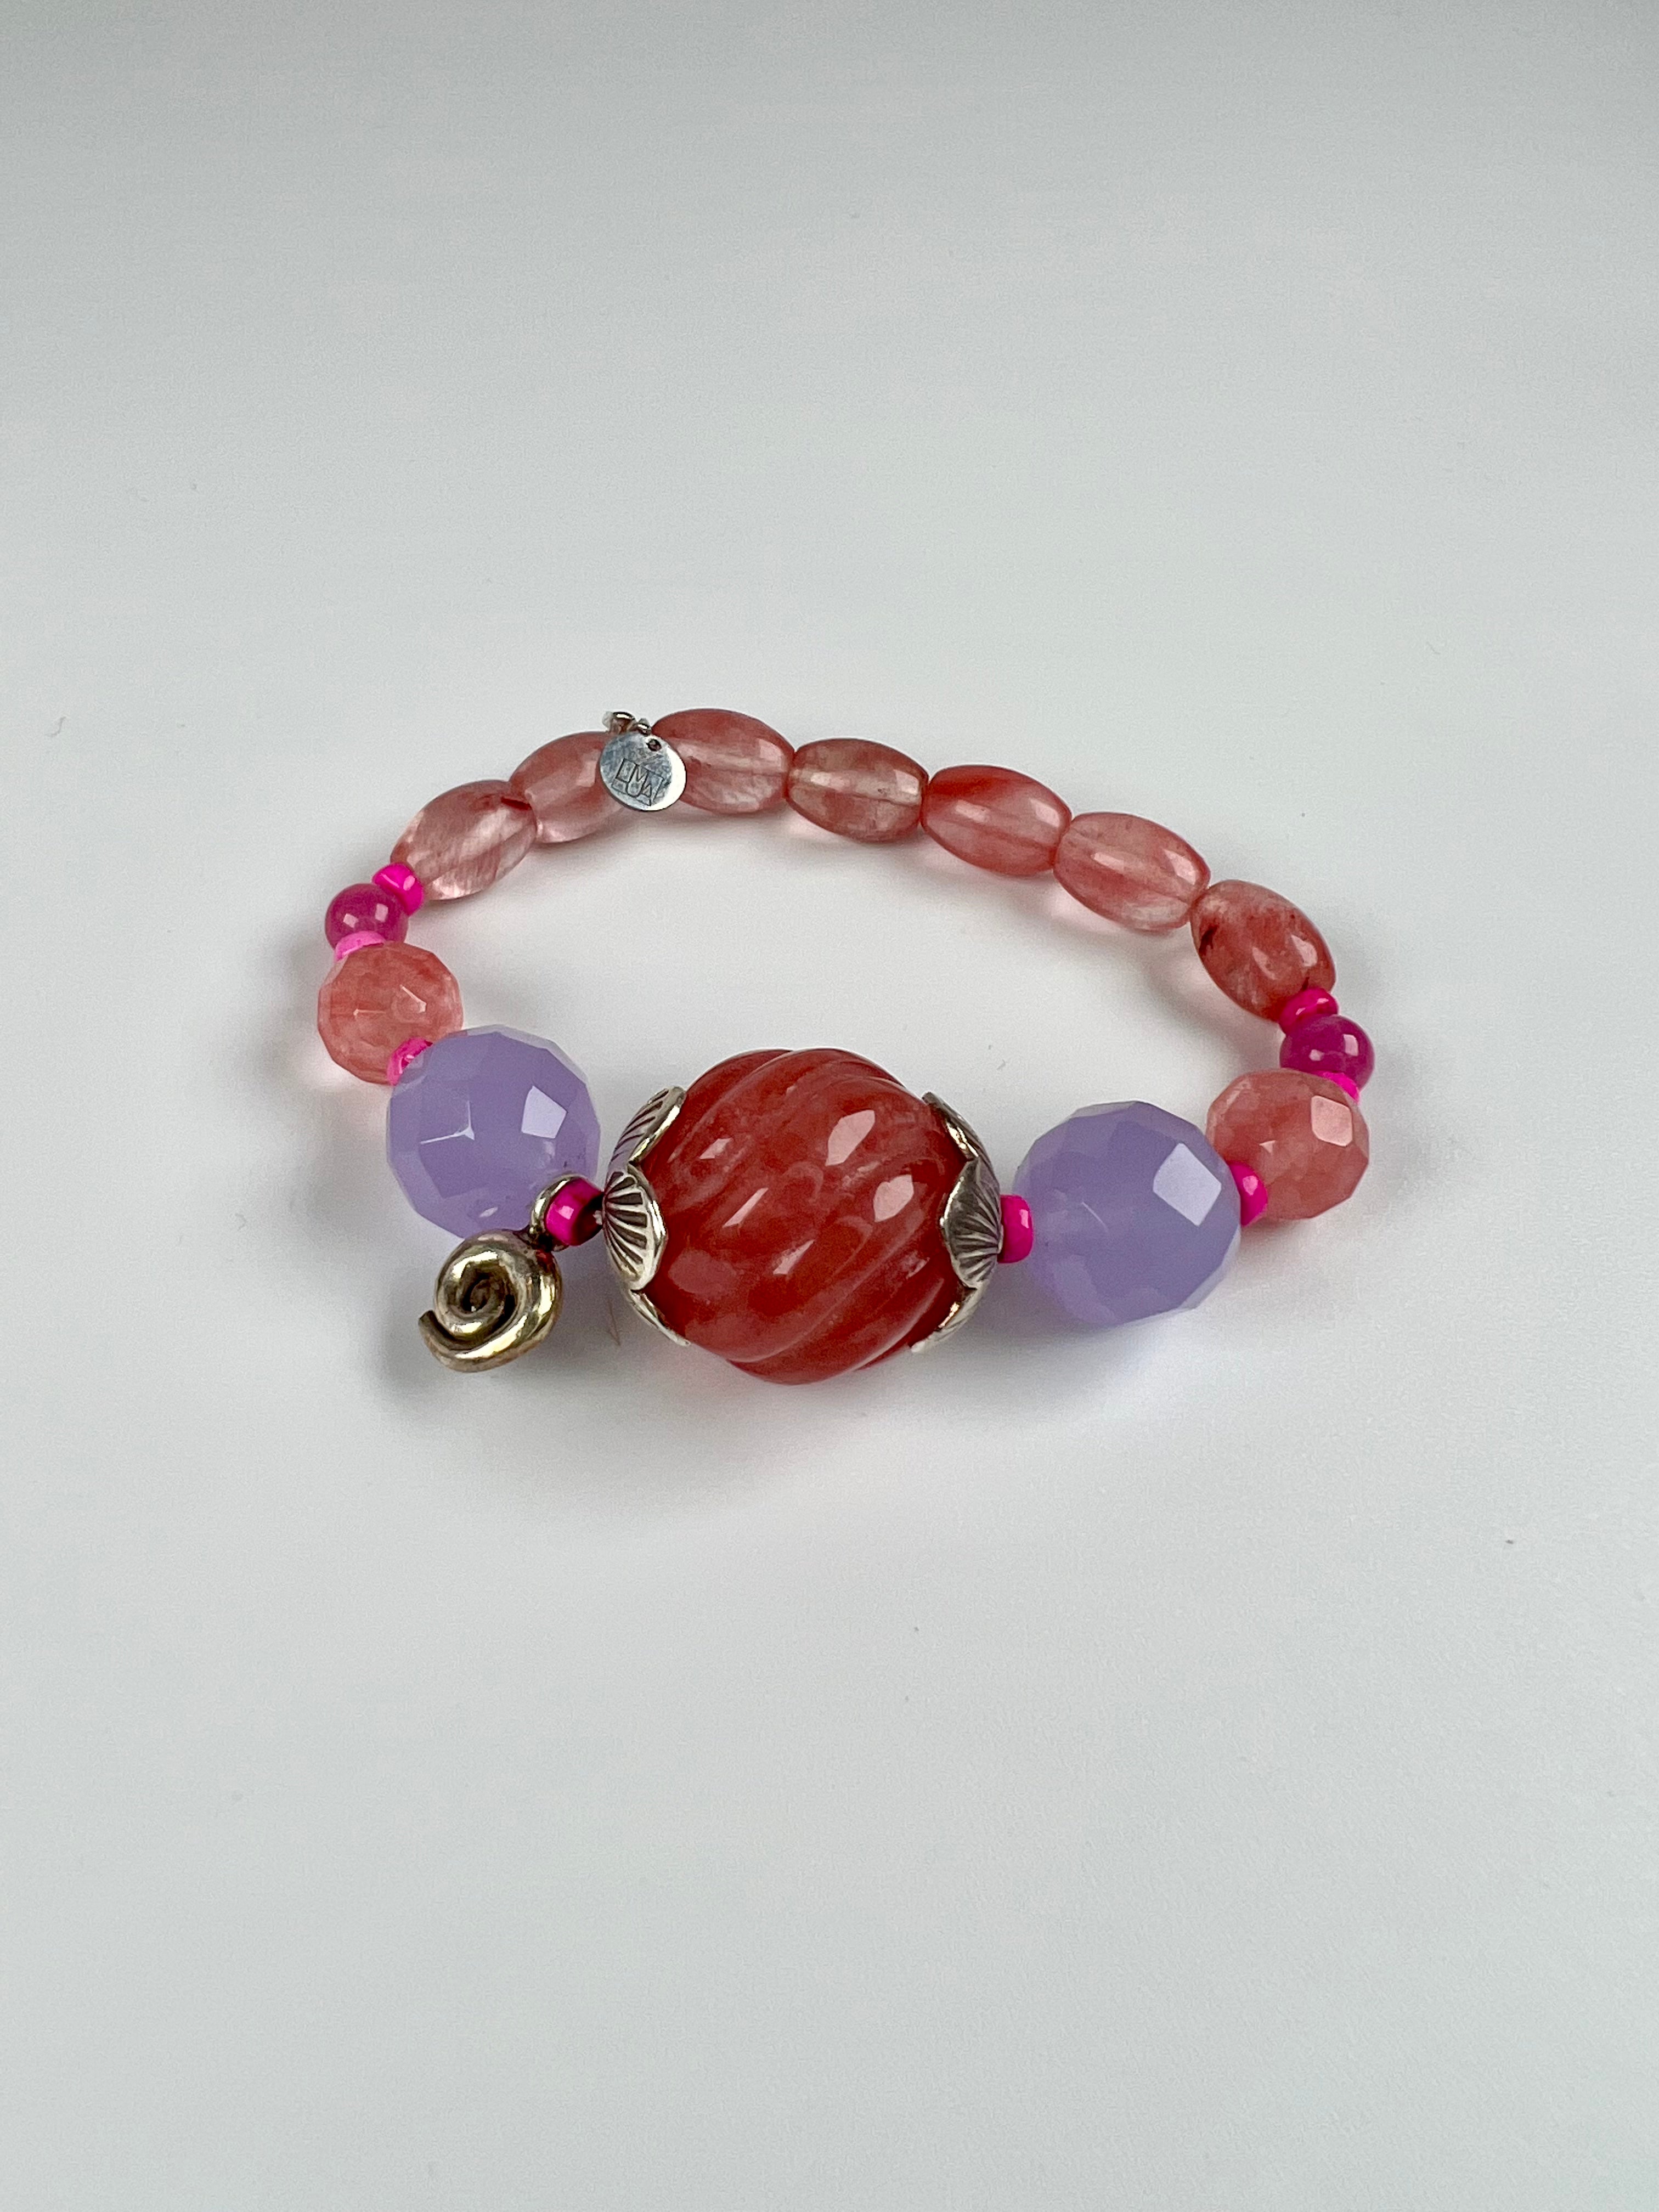 Armband aus rosa Morganit, pinke Koralle und lila Kunzit mit Silberelementen